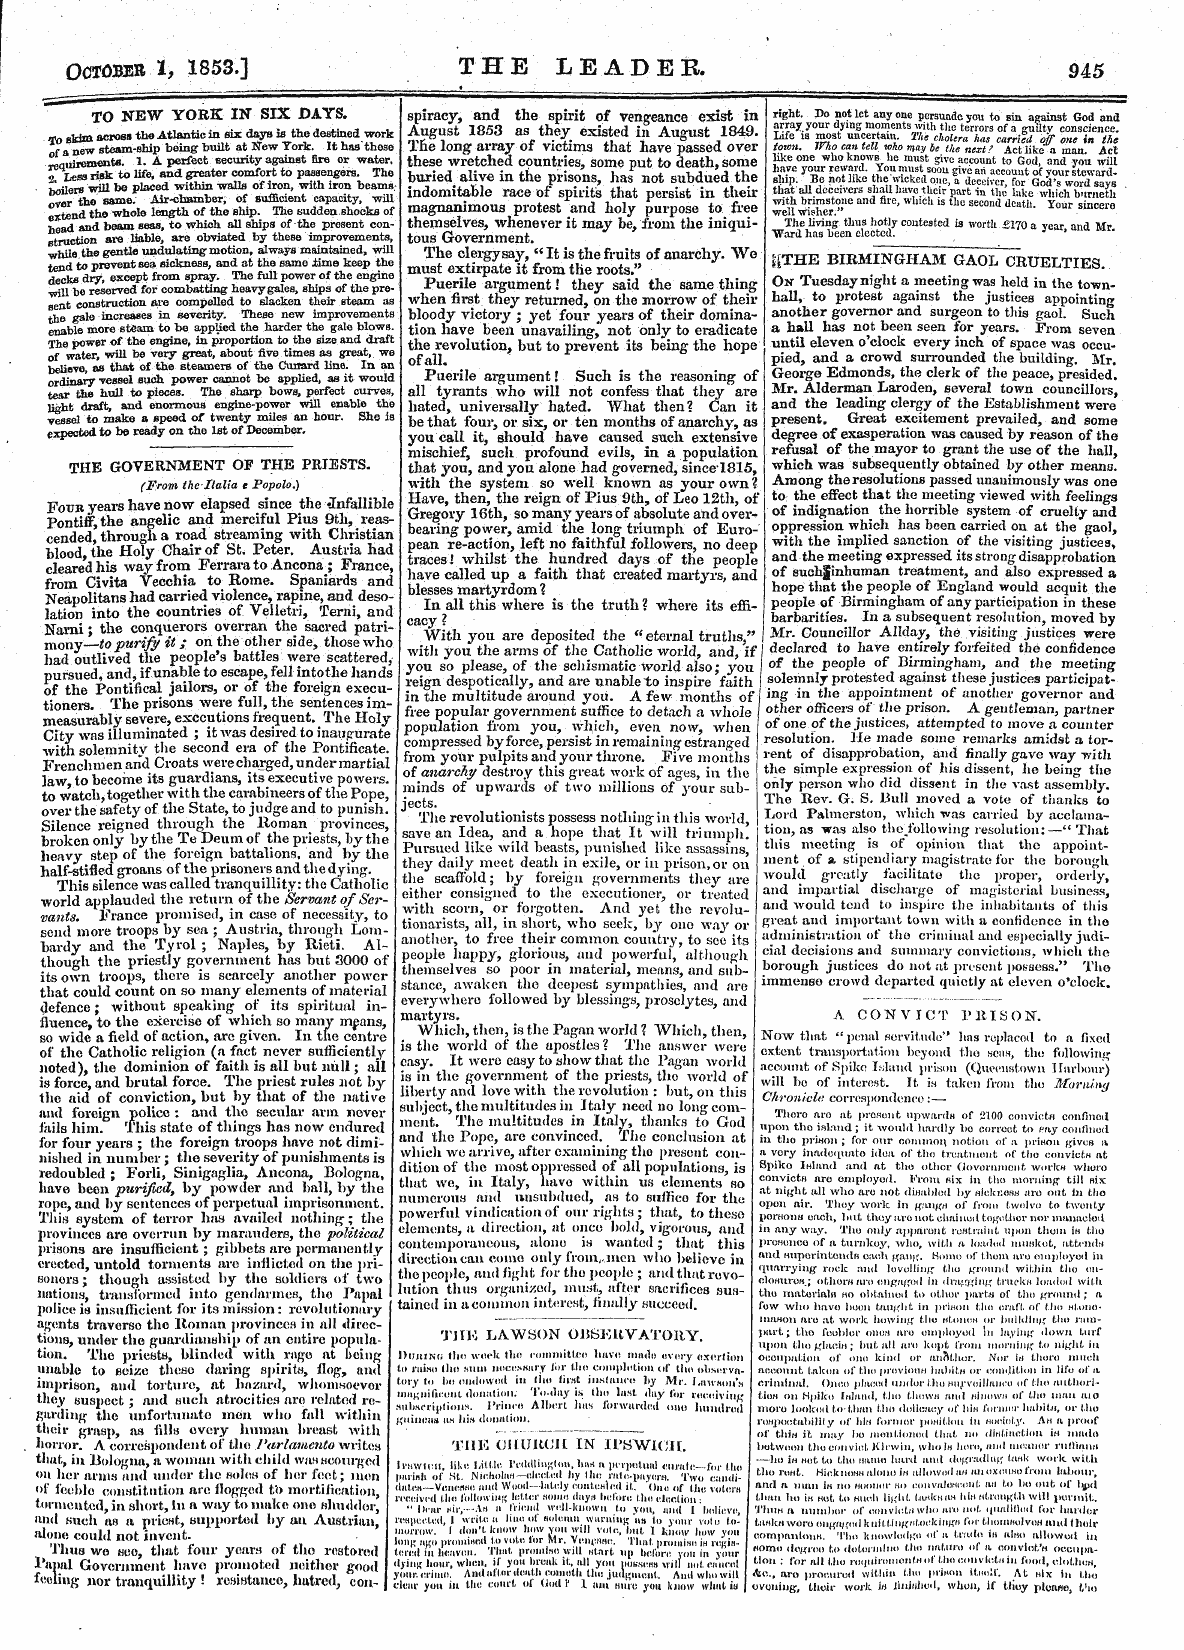 Leader (1850-1860): jS F Y, 2nd edition - Ootobeb I, 1853.] The Leadee, 345